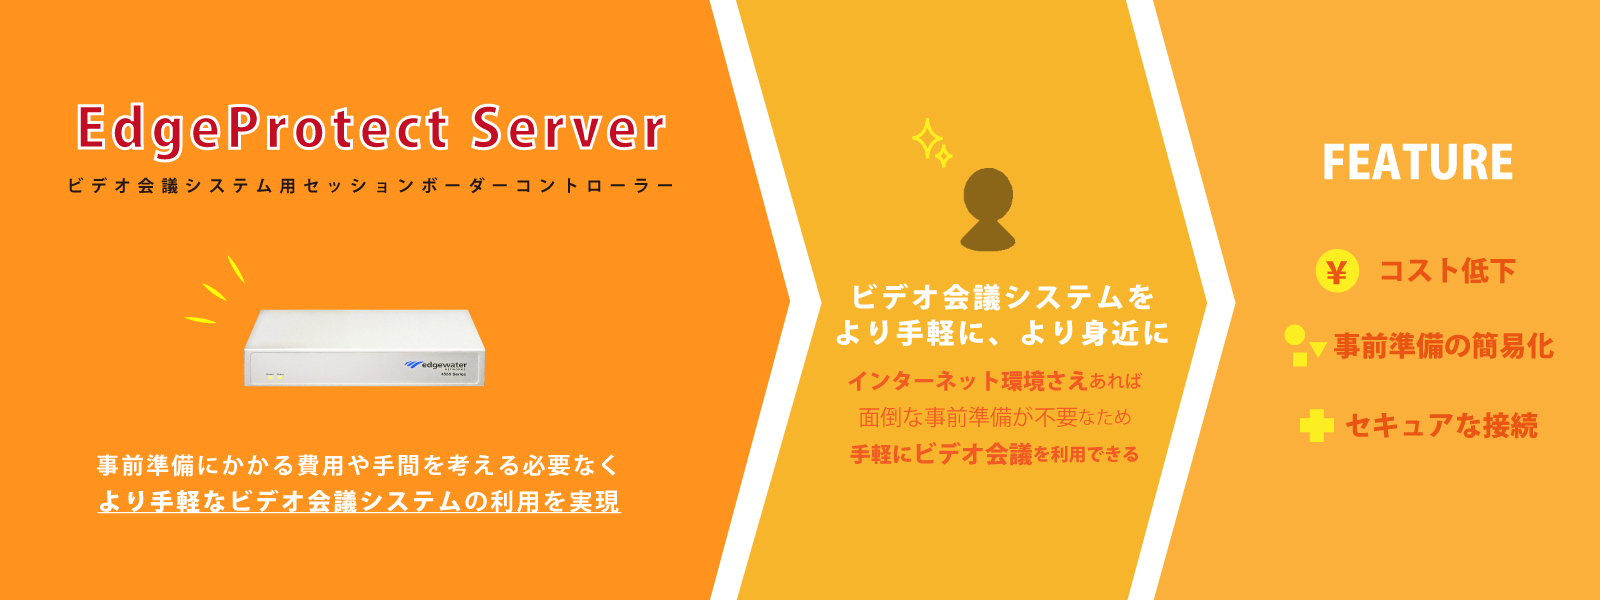 EdgeProtect Server